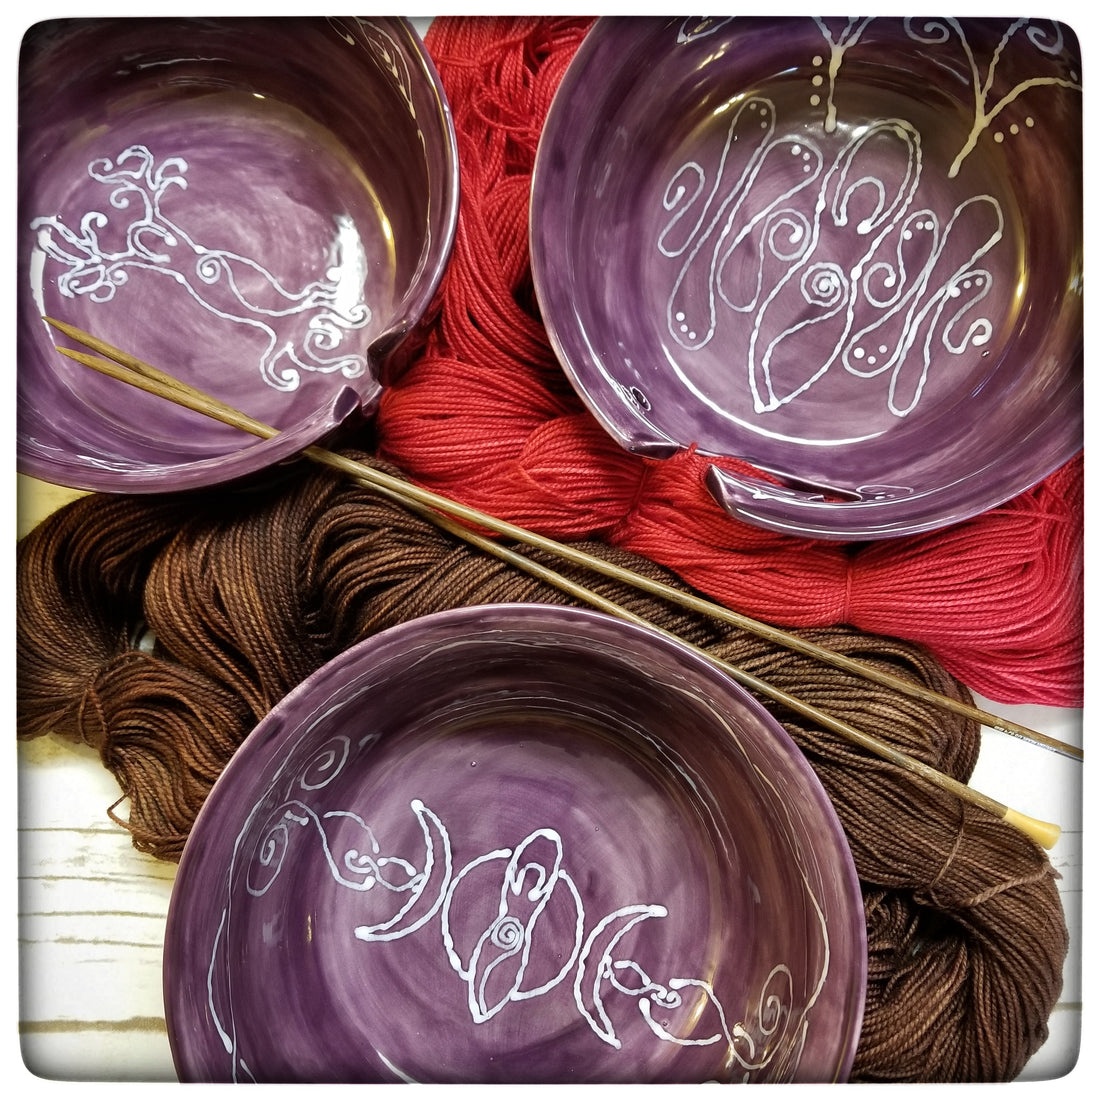 New in the shop: Goddess yarn bowls